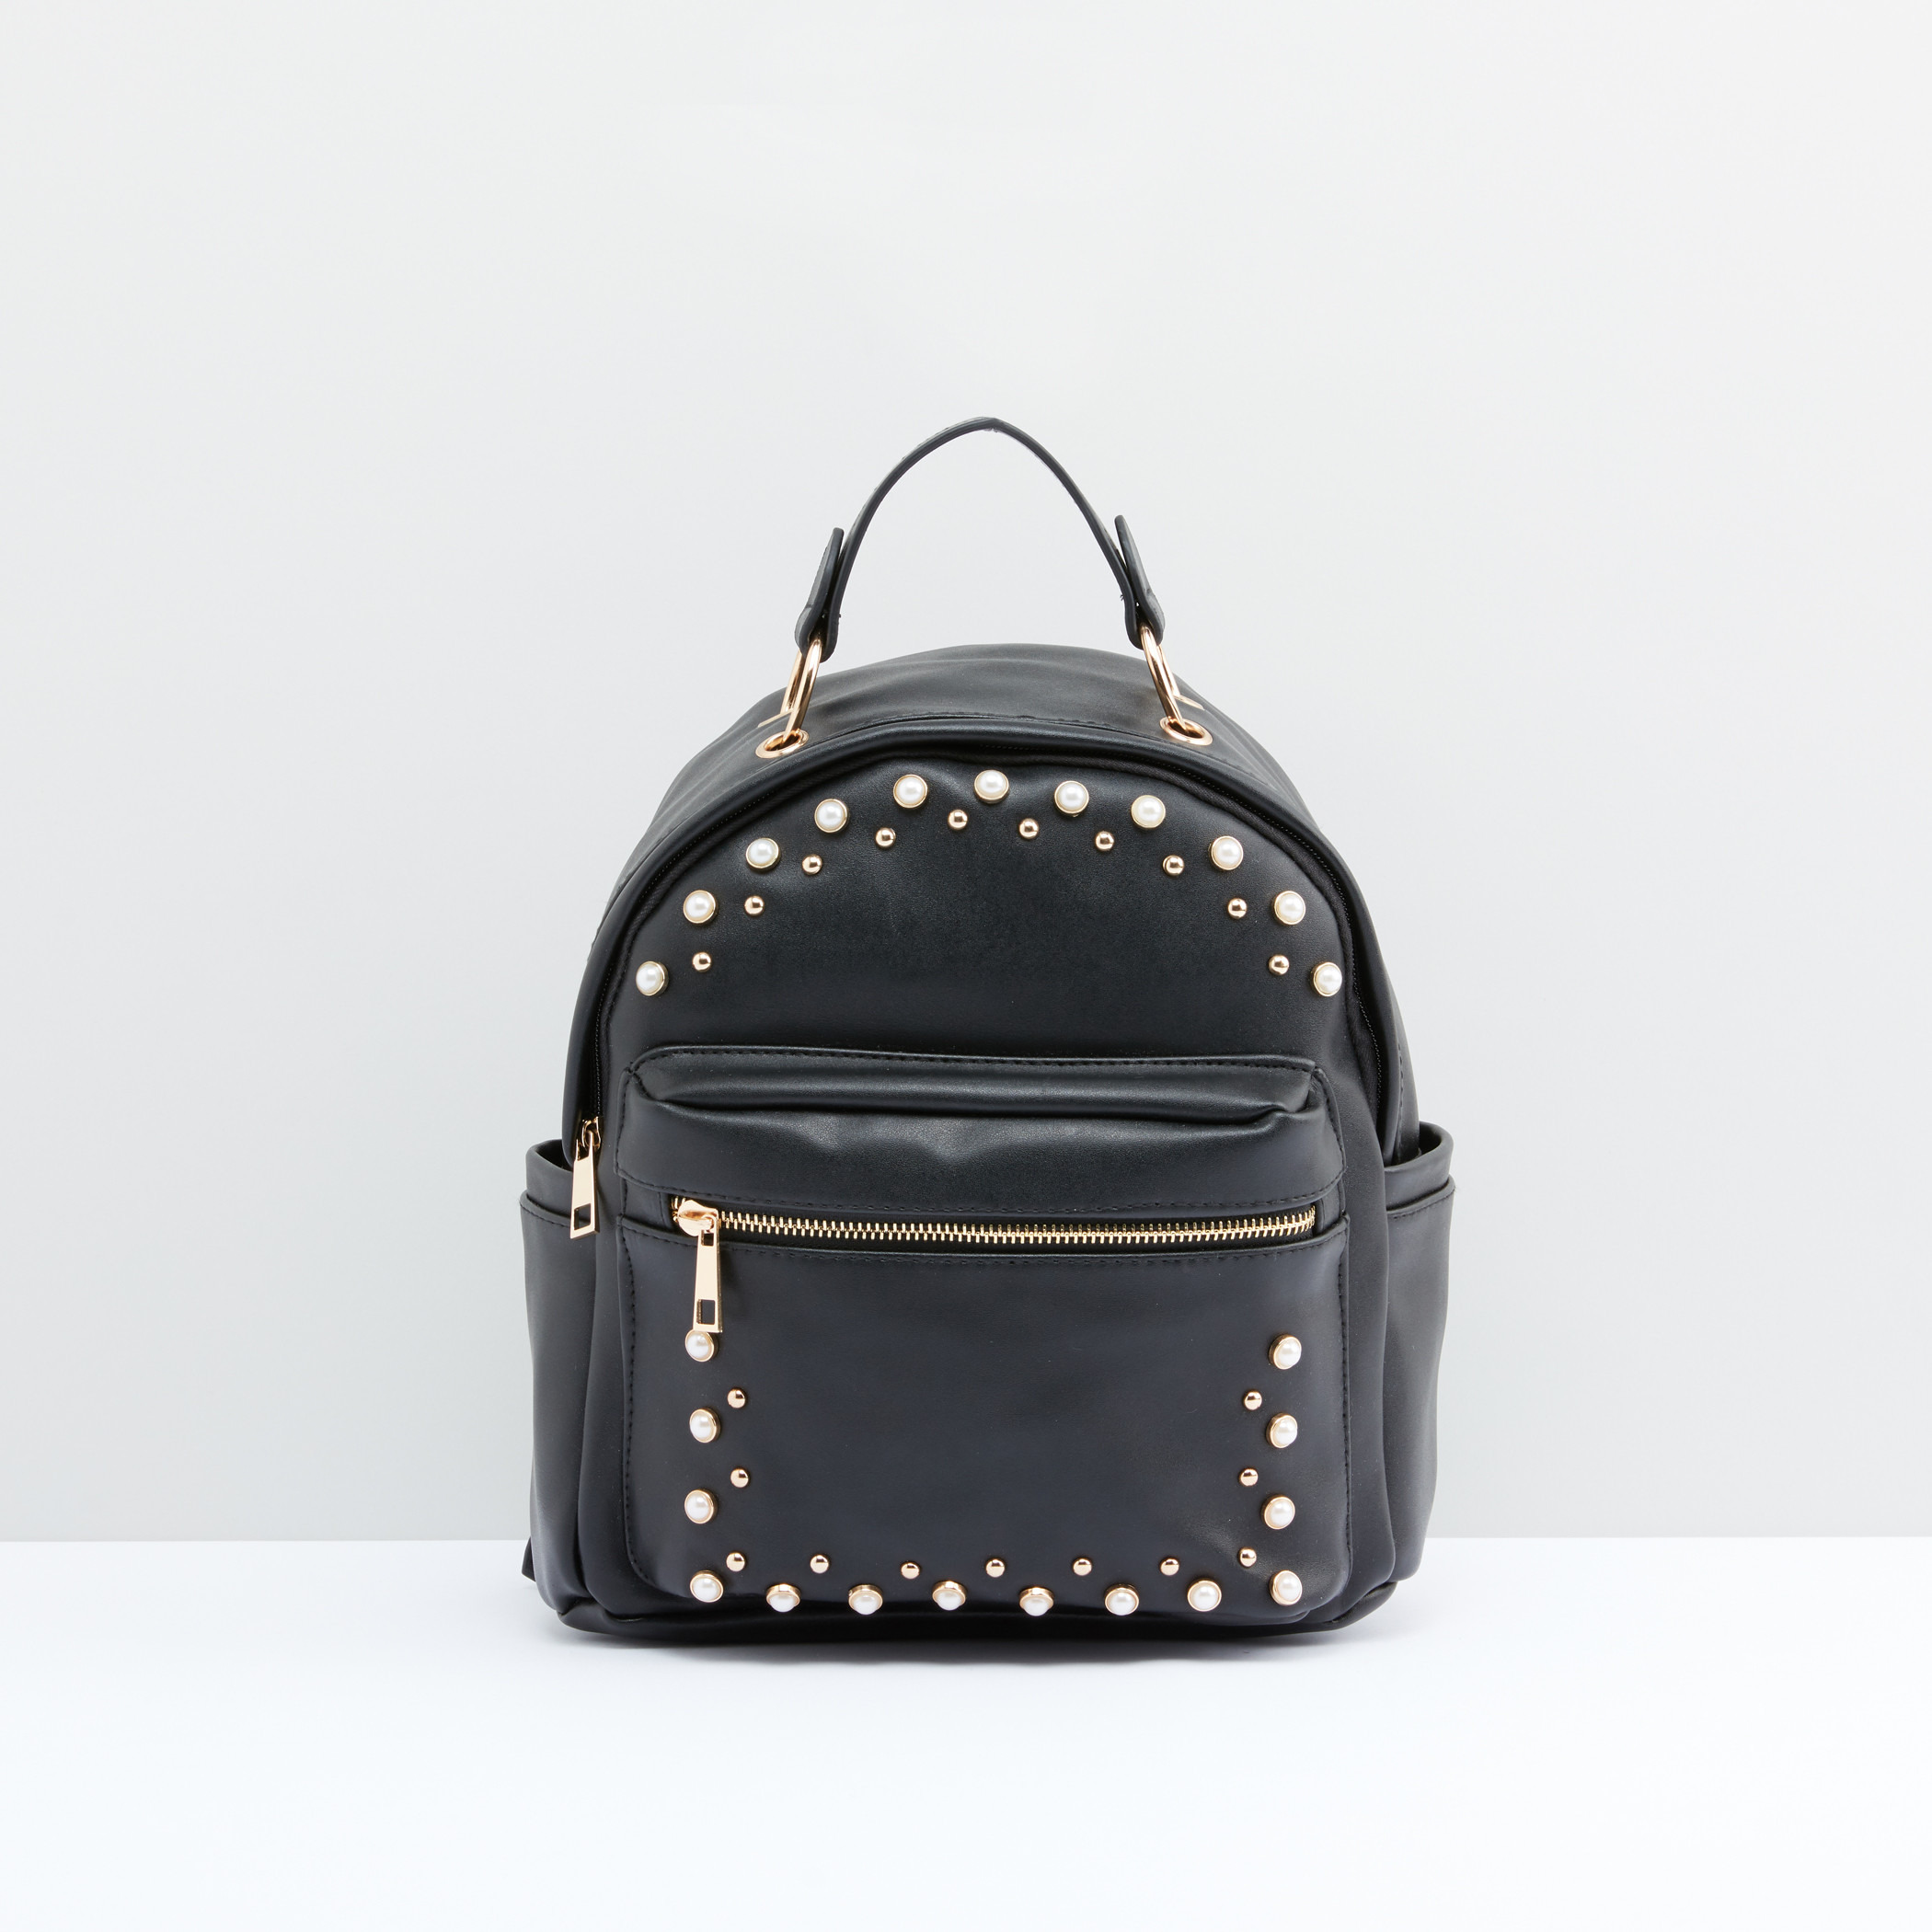 BROMEN Backpack Purse for Women Leather Anti-theft Travel Backpack Fashion  College Shoulder Handbag, Color - Coffee